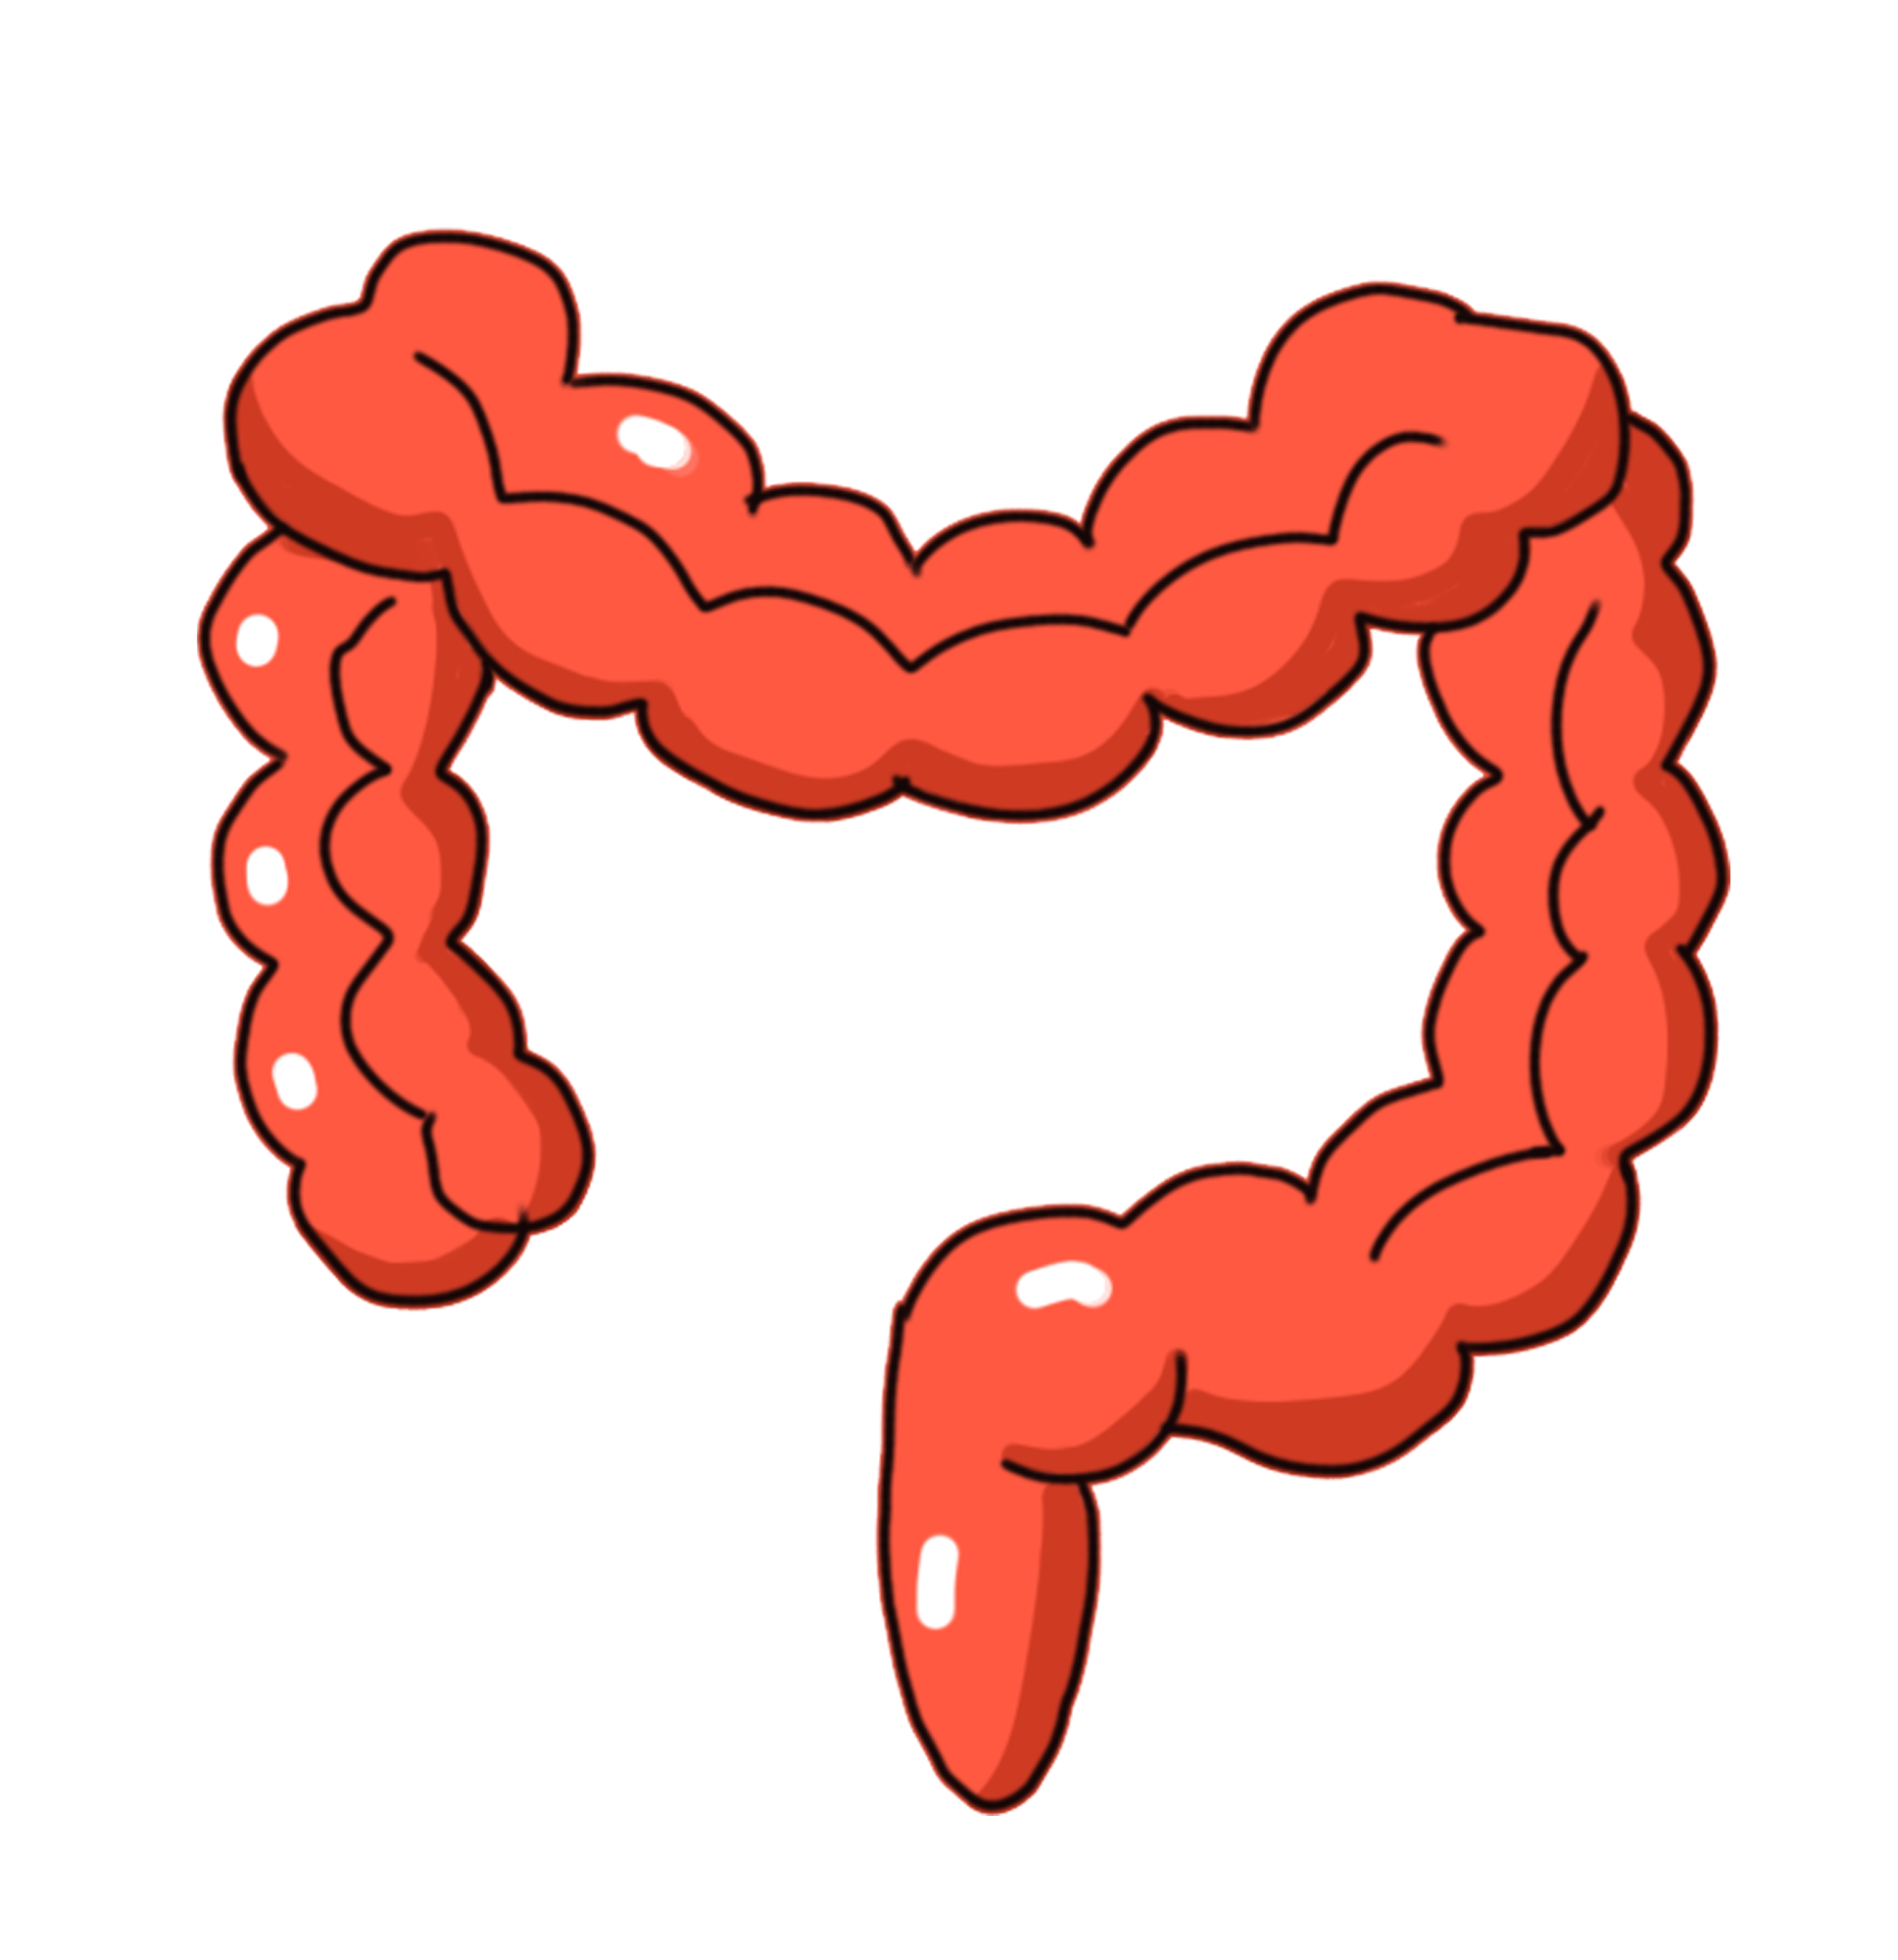 Pngtreehuman organs intestines illustration 4516161